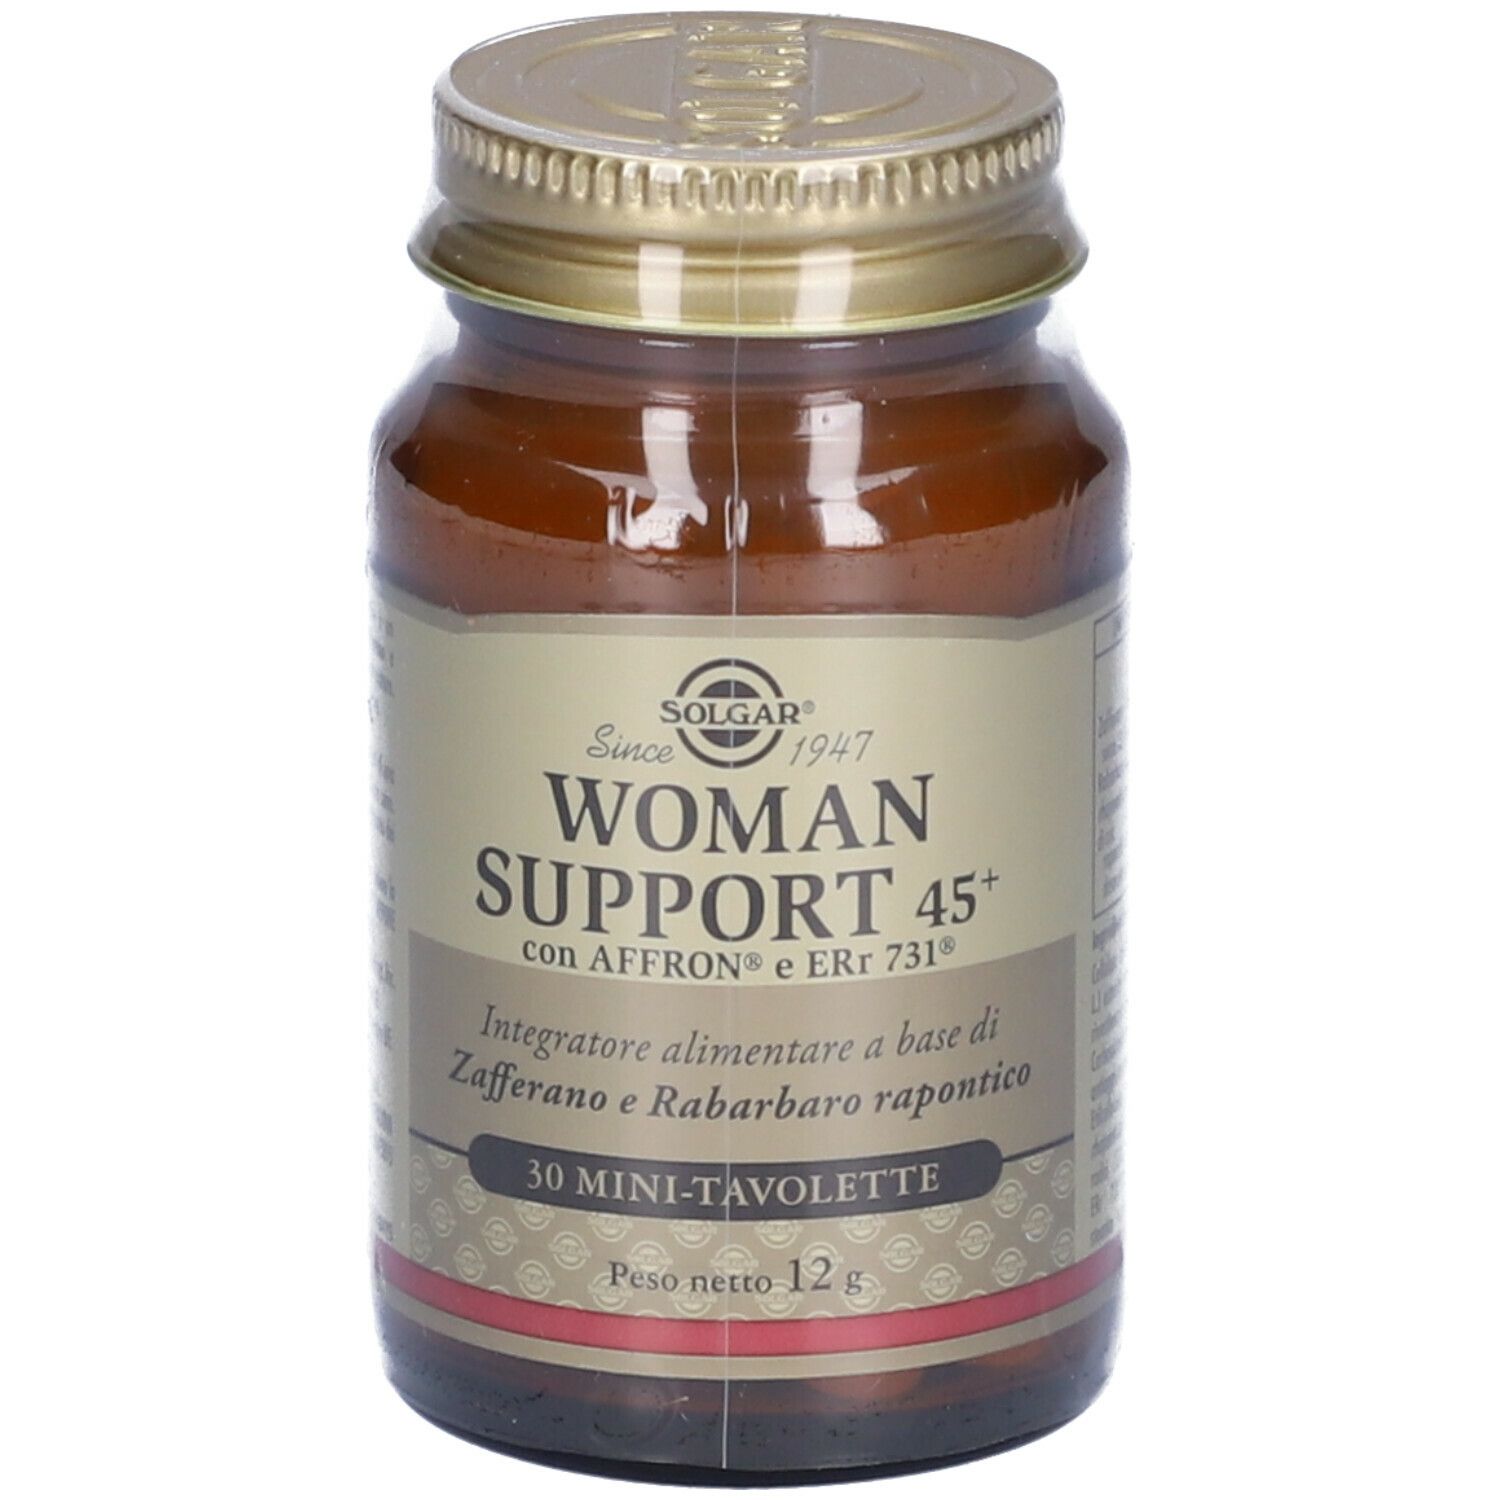 SOLGAR® Woman support